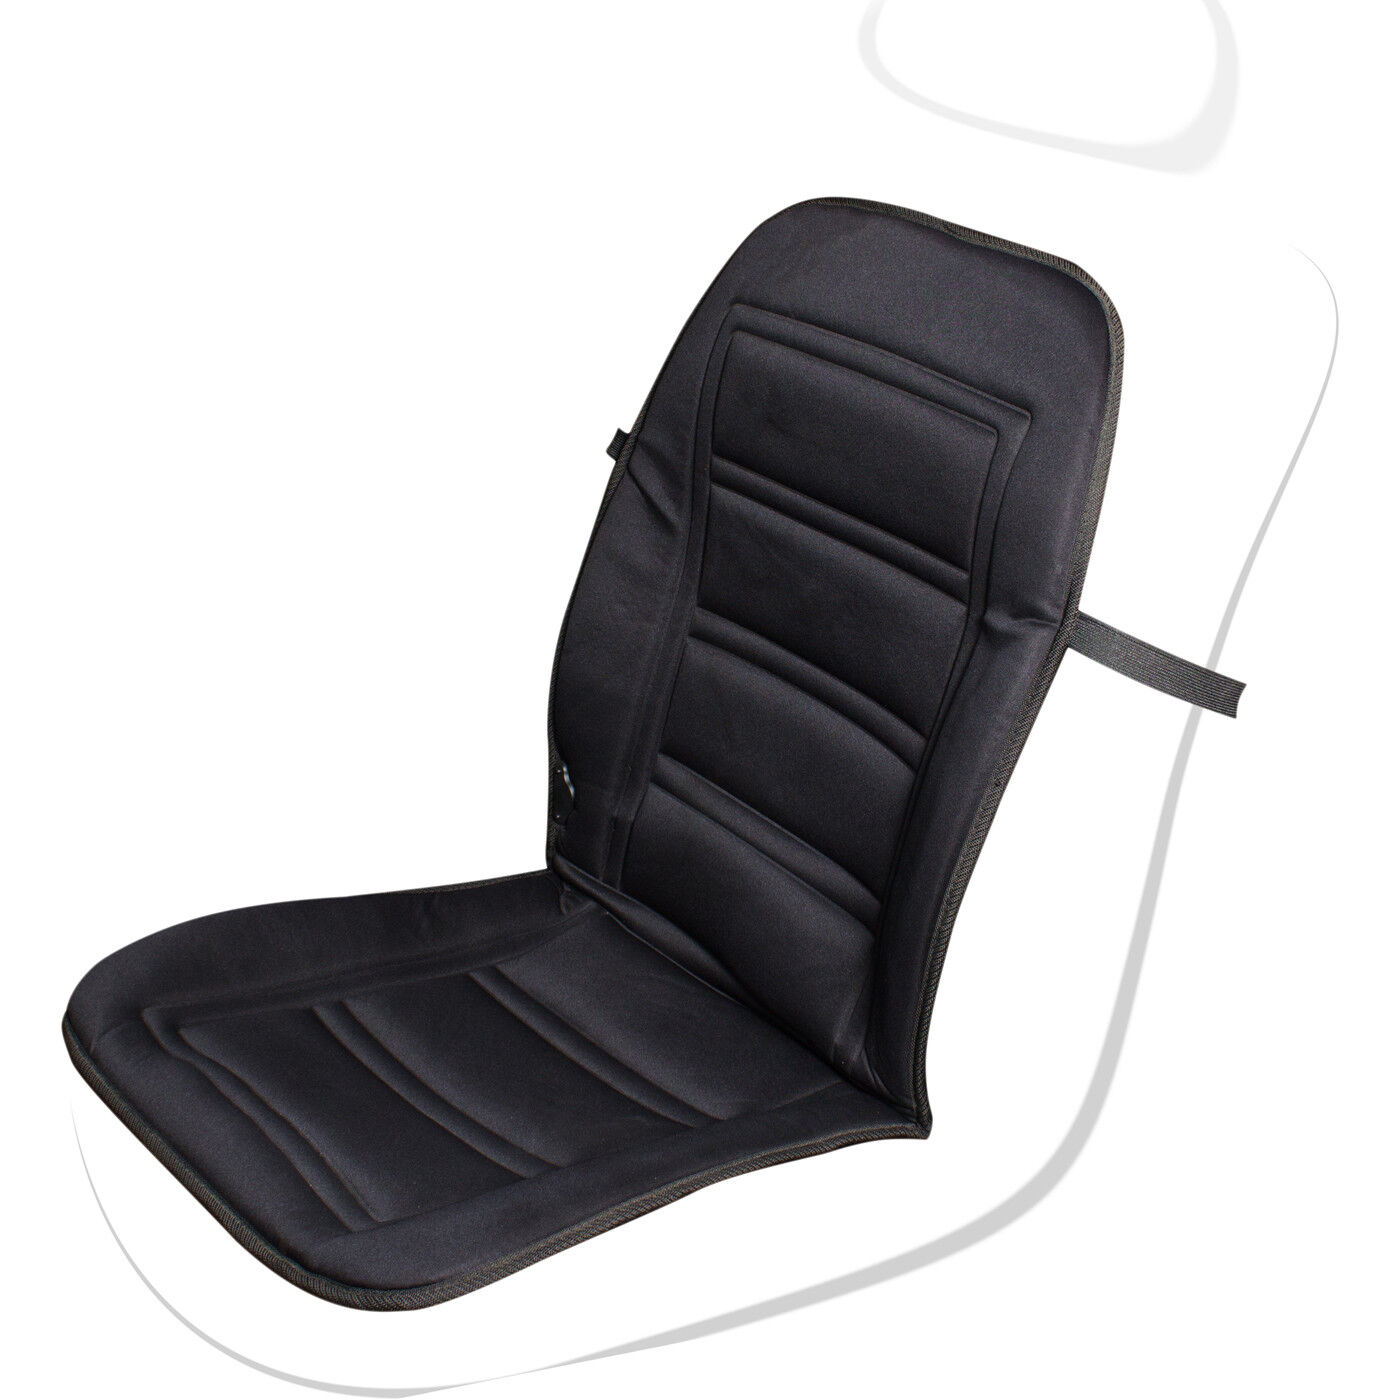 Heated Car Seat Cushion Auto Winter Hot Universal Warmer Control Pad -12 Volt